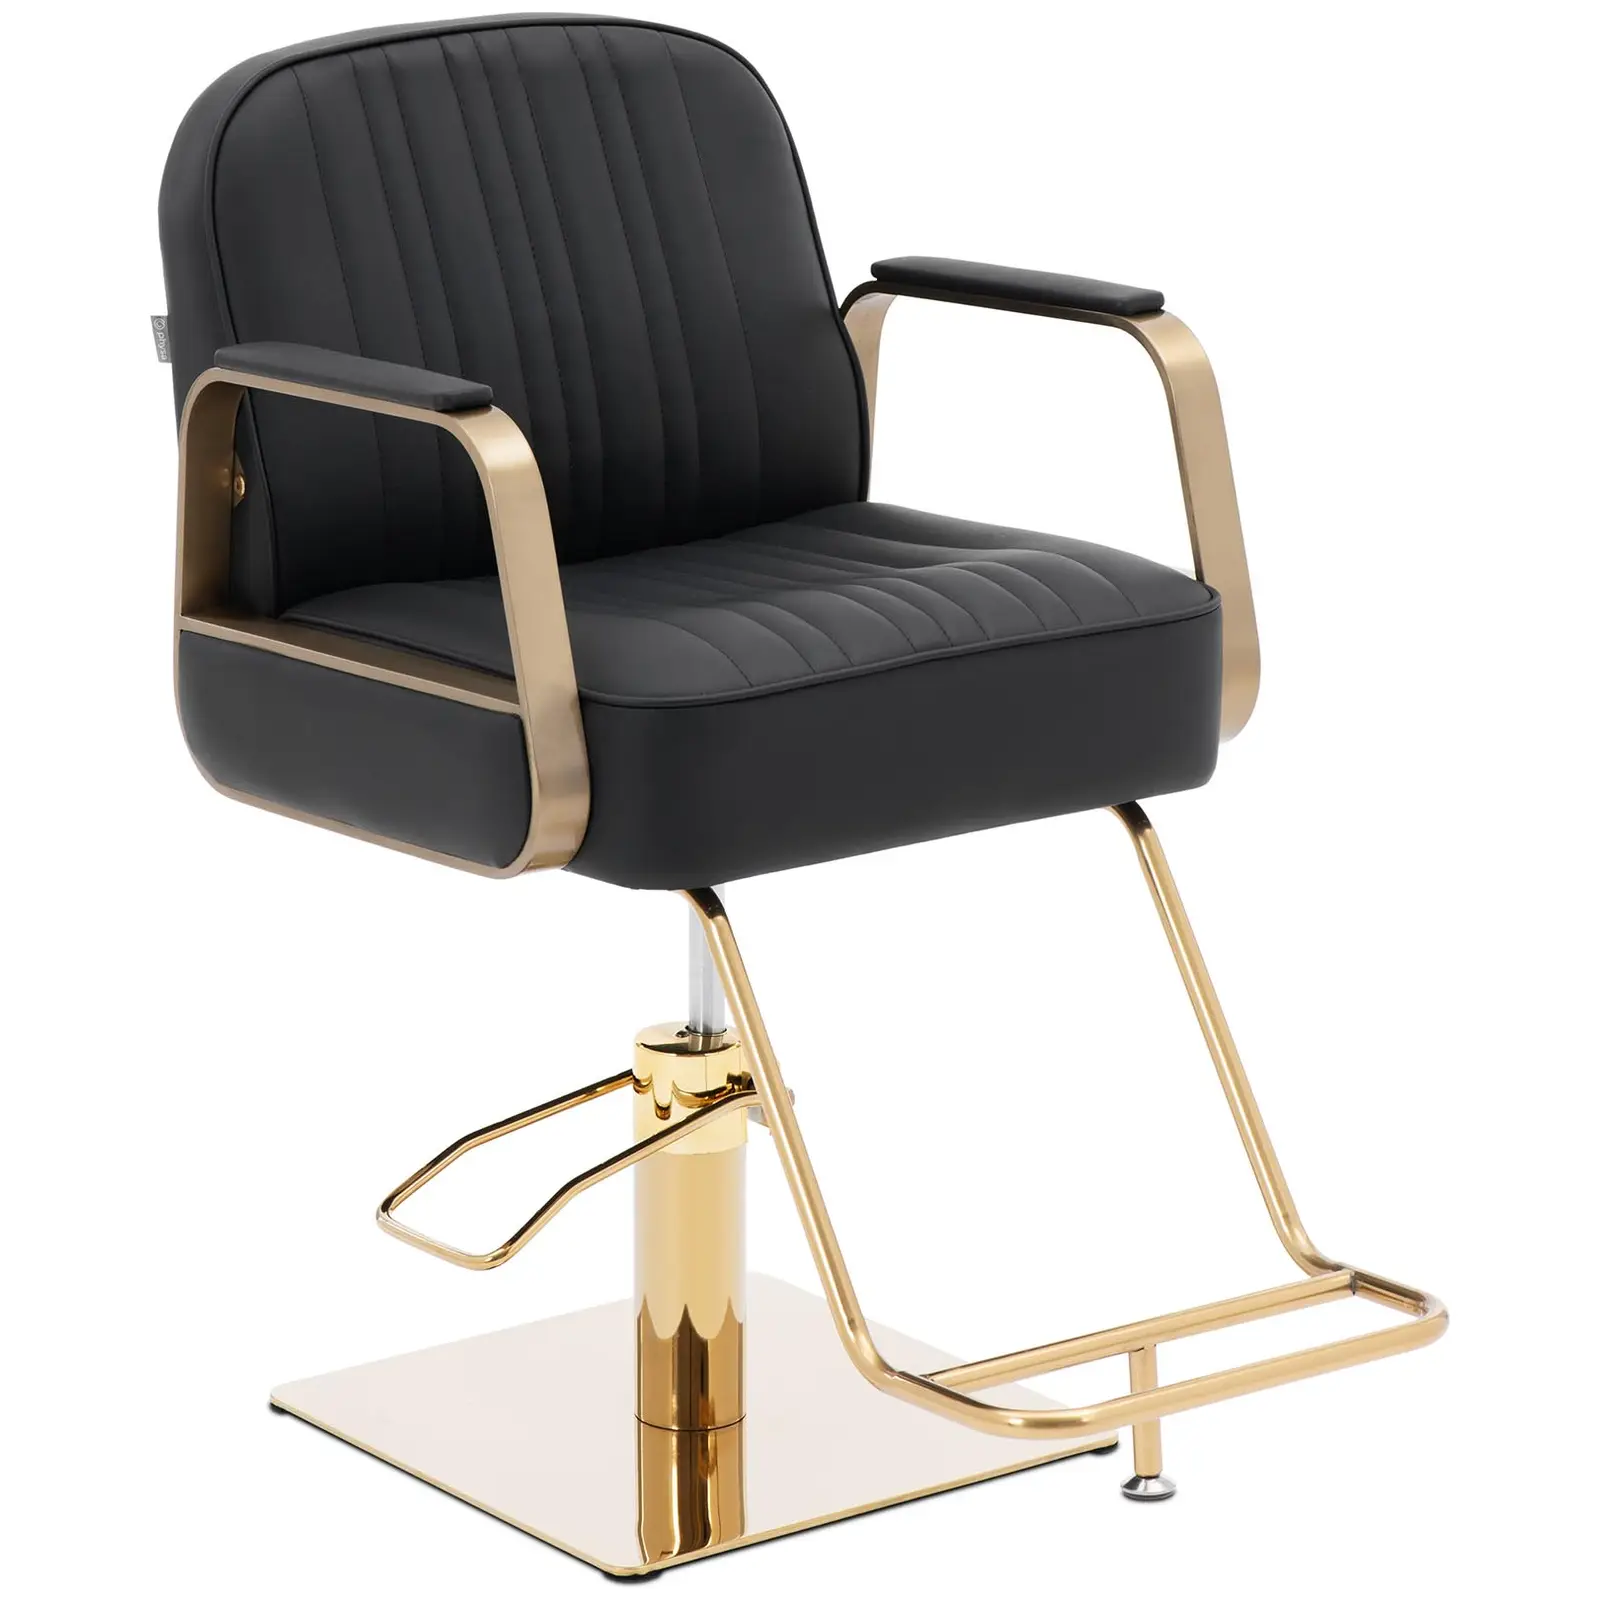 Kappersstoel met voetensteun - 920 - 1070 mm - 200 kg - Zwart/Goud gekleurd